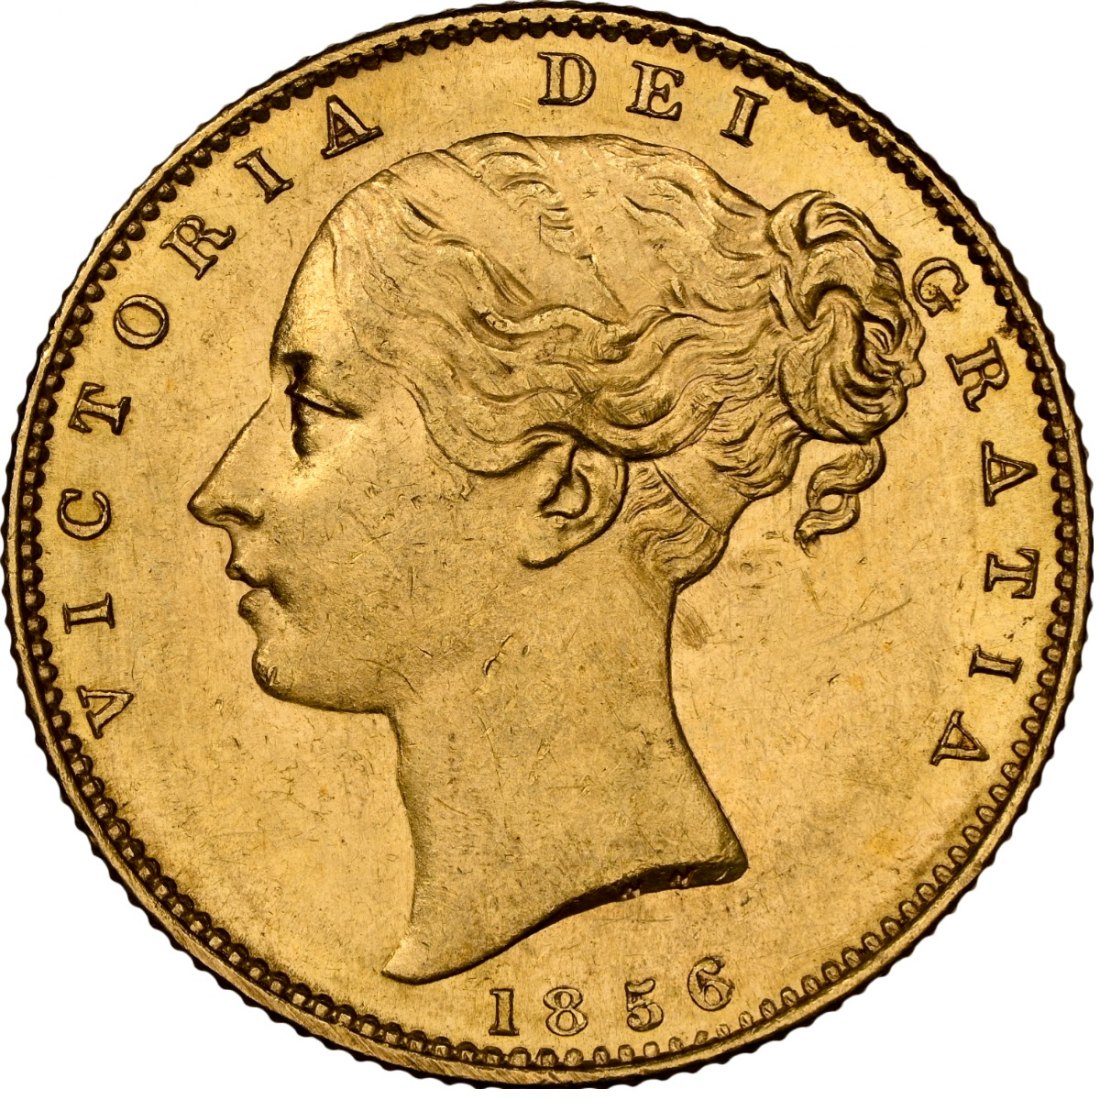  UK 1 Sovereign 1856 | MS61 | Königin Victoria   